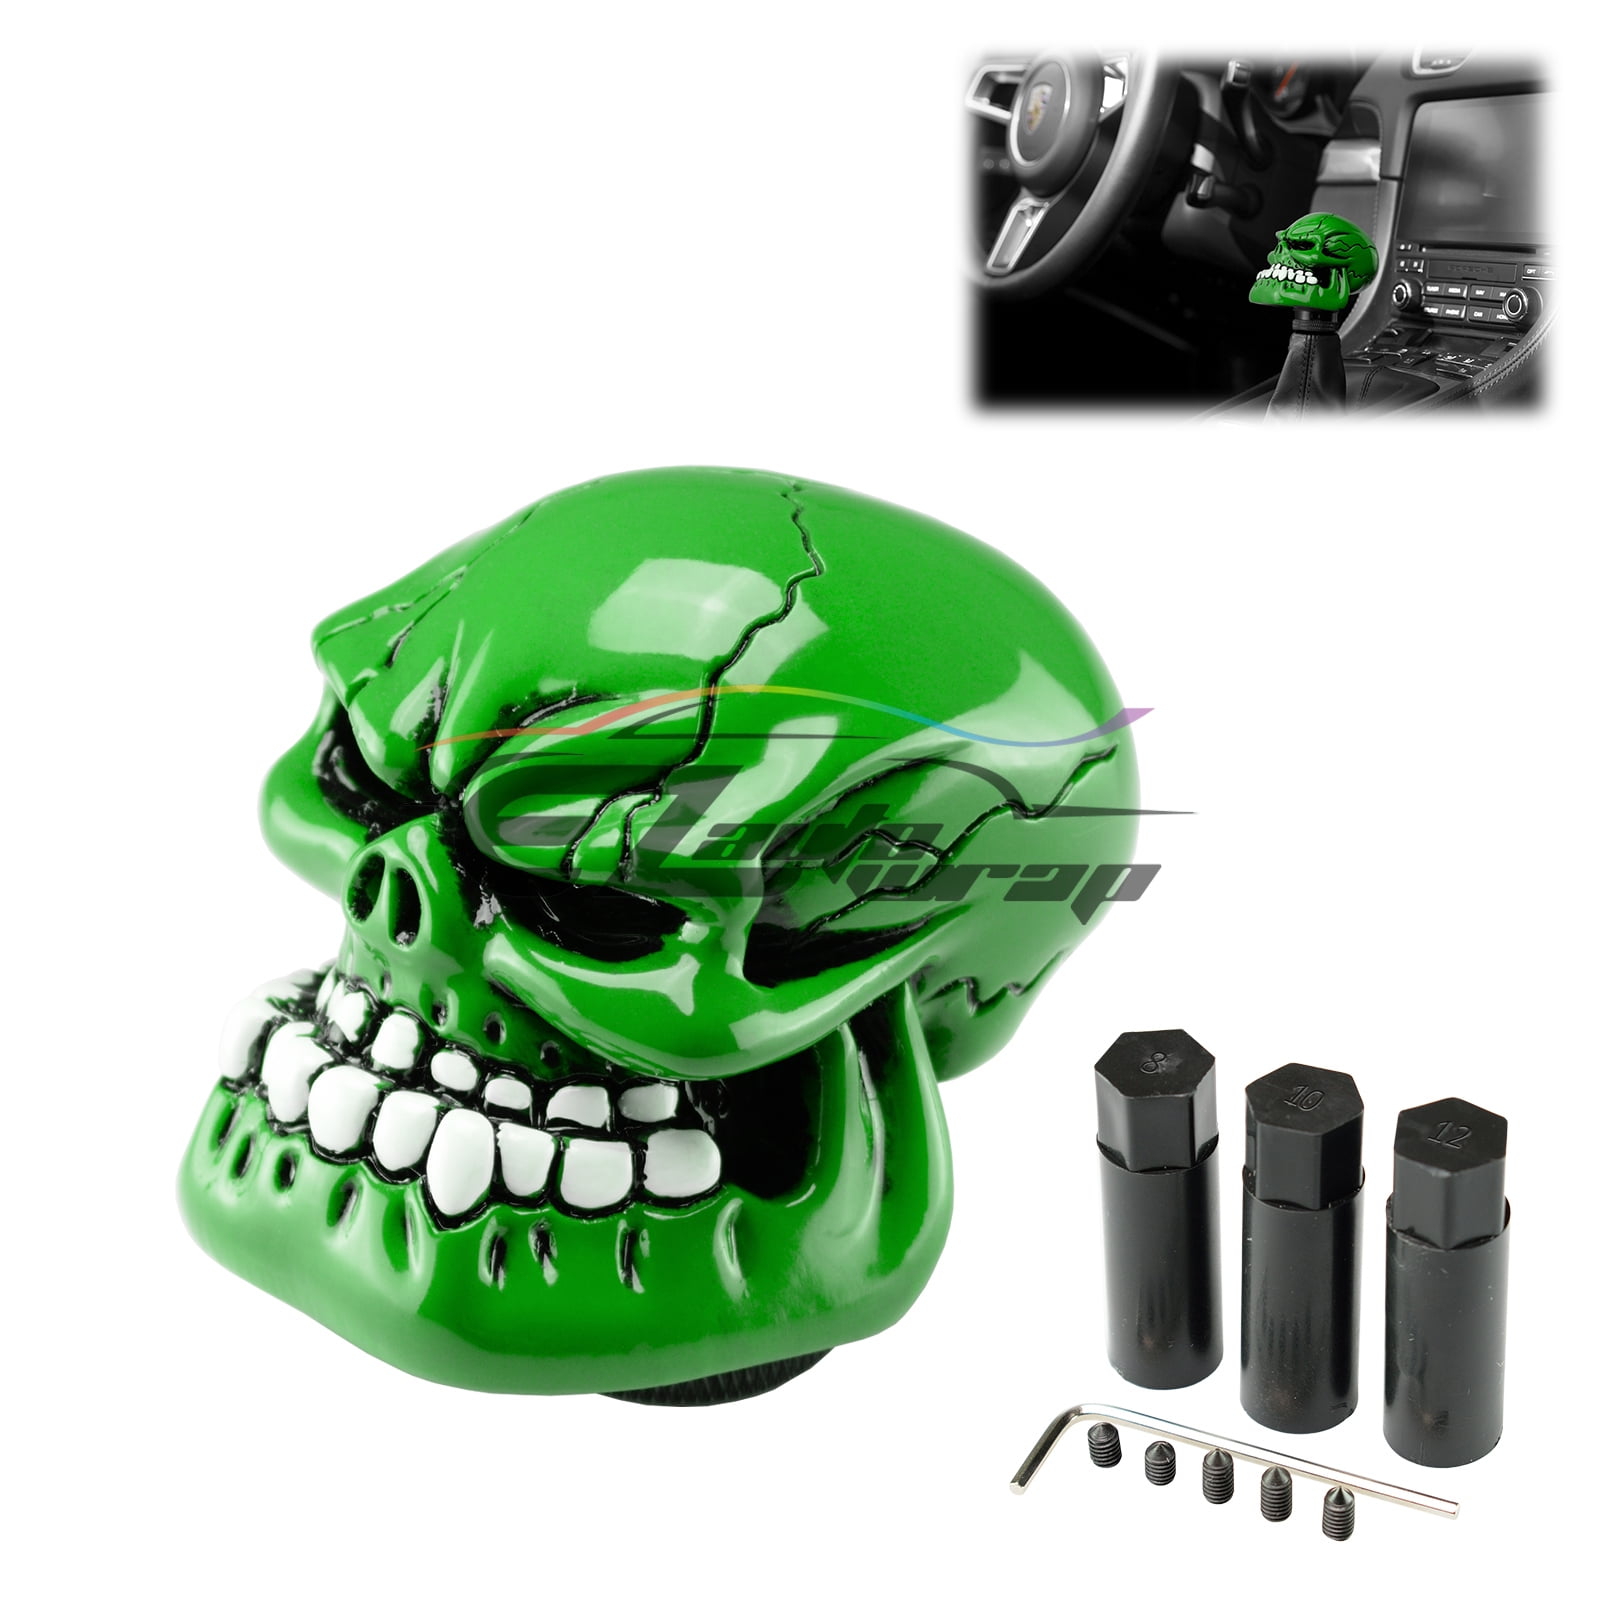 ZYHW Human Bone Skull Shift Gear Knob Cover Stick Shifter for Car Truck Green